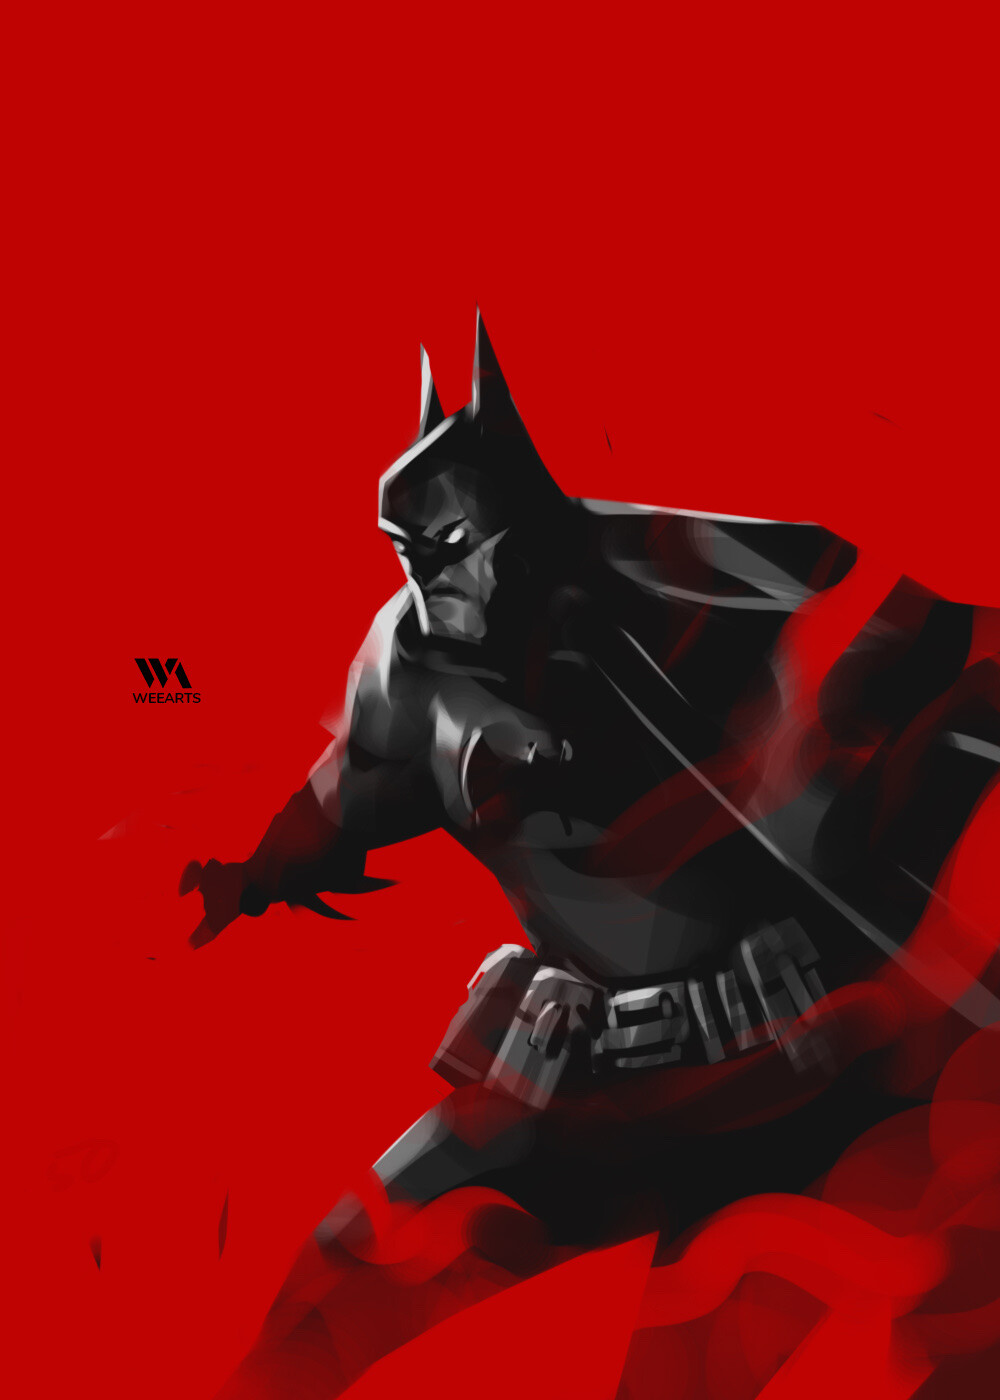 ArtStation - Batman - RED background series